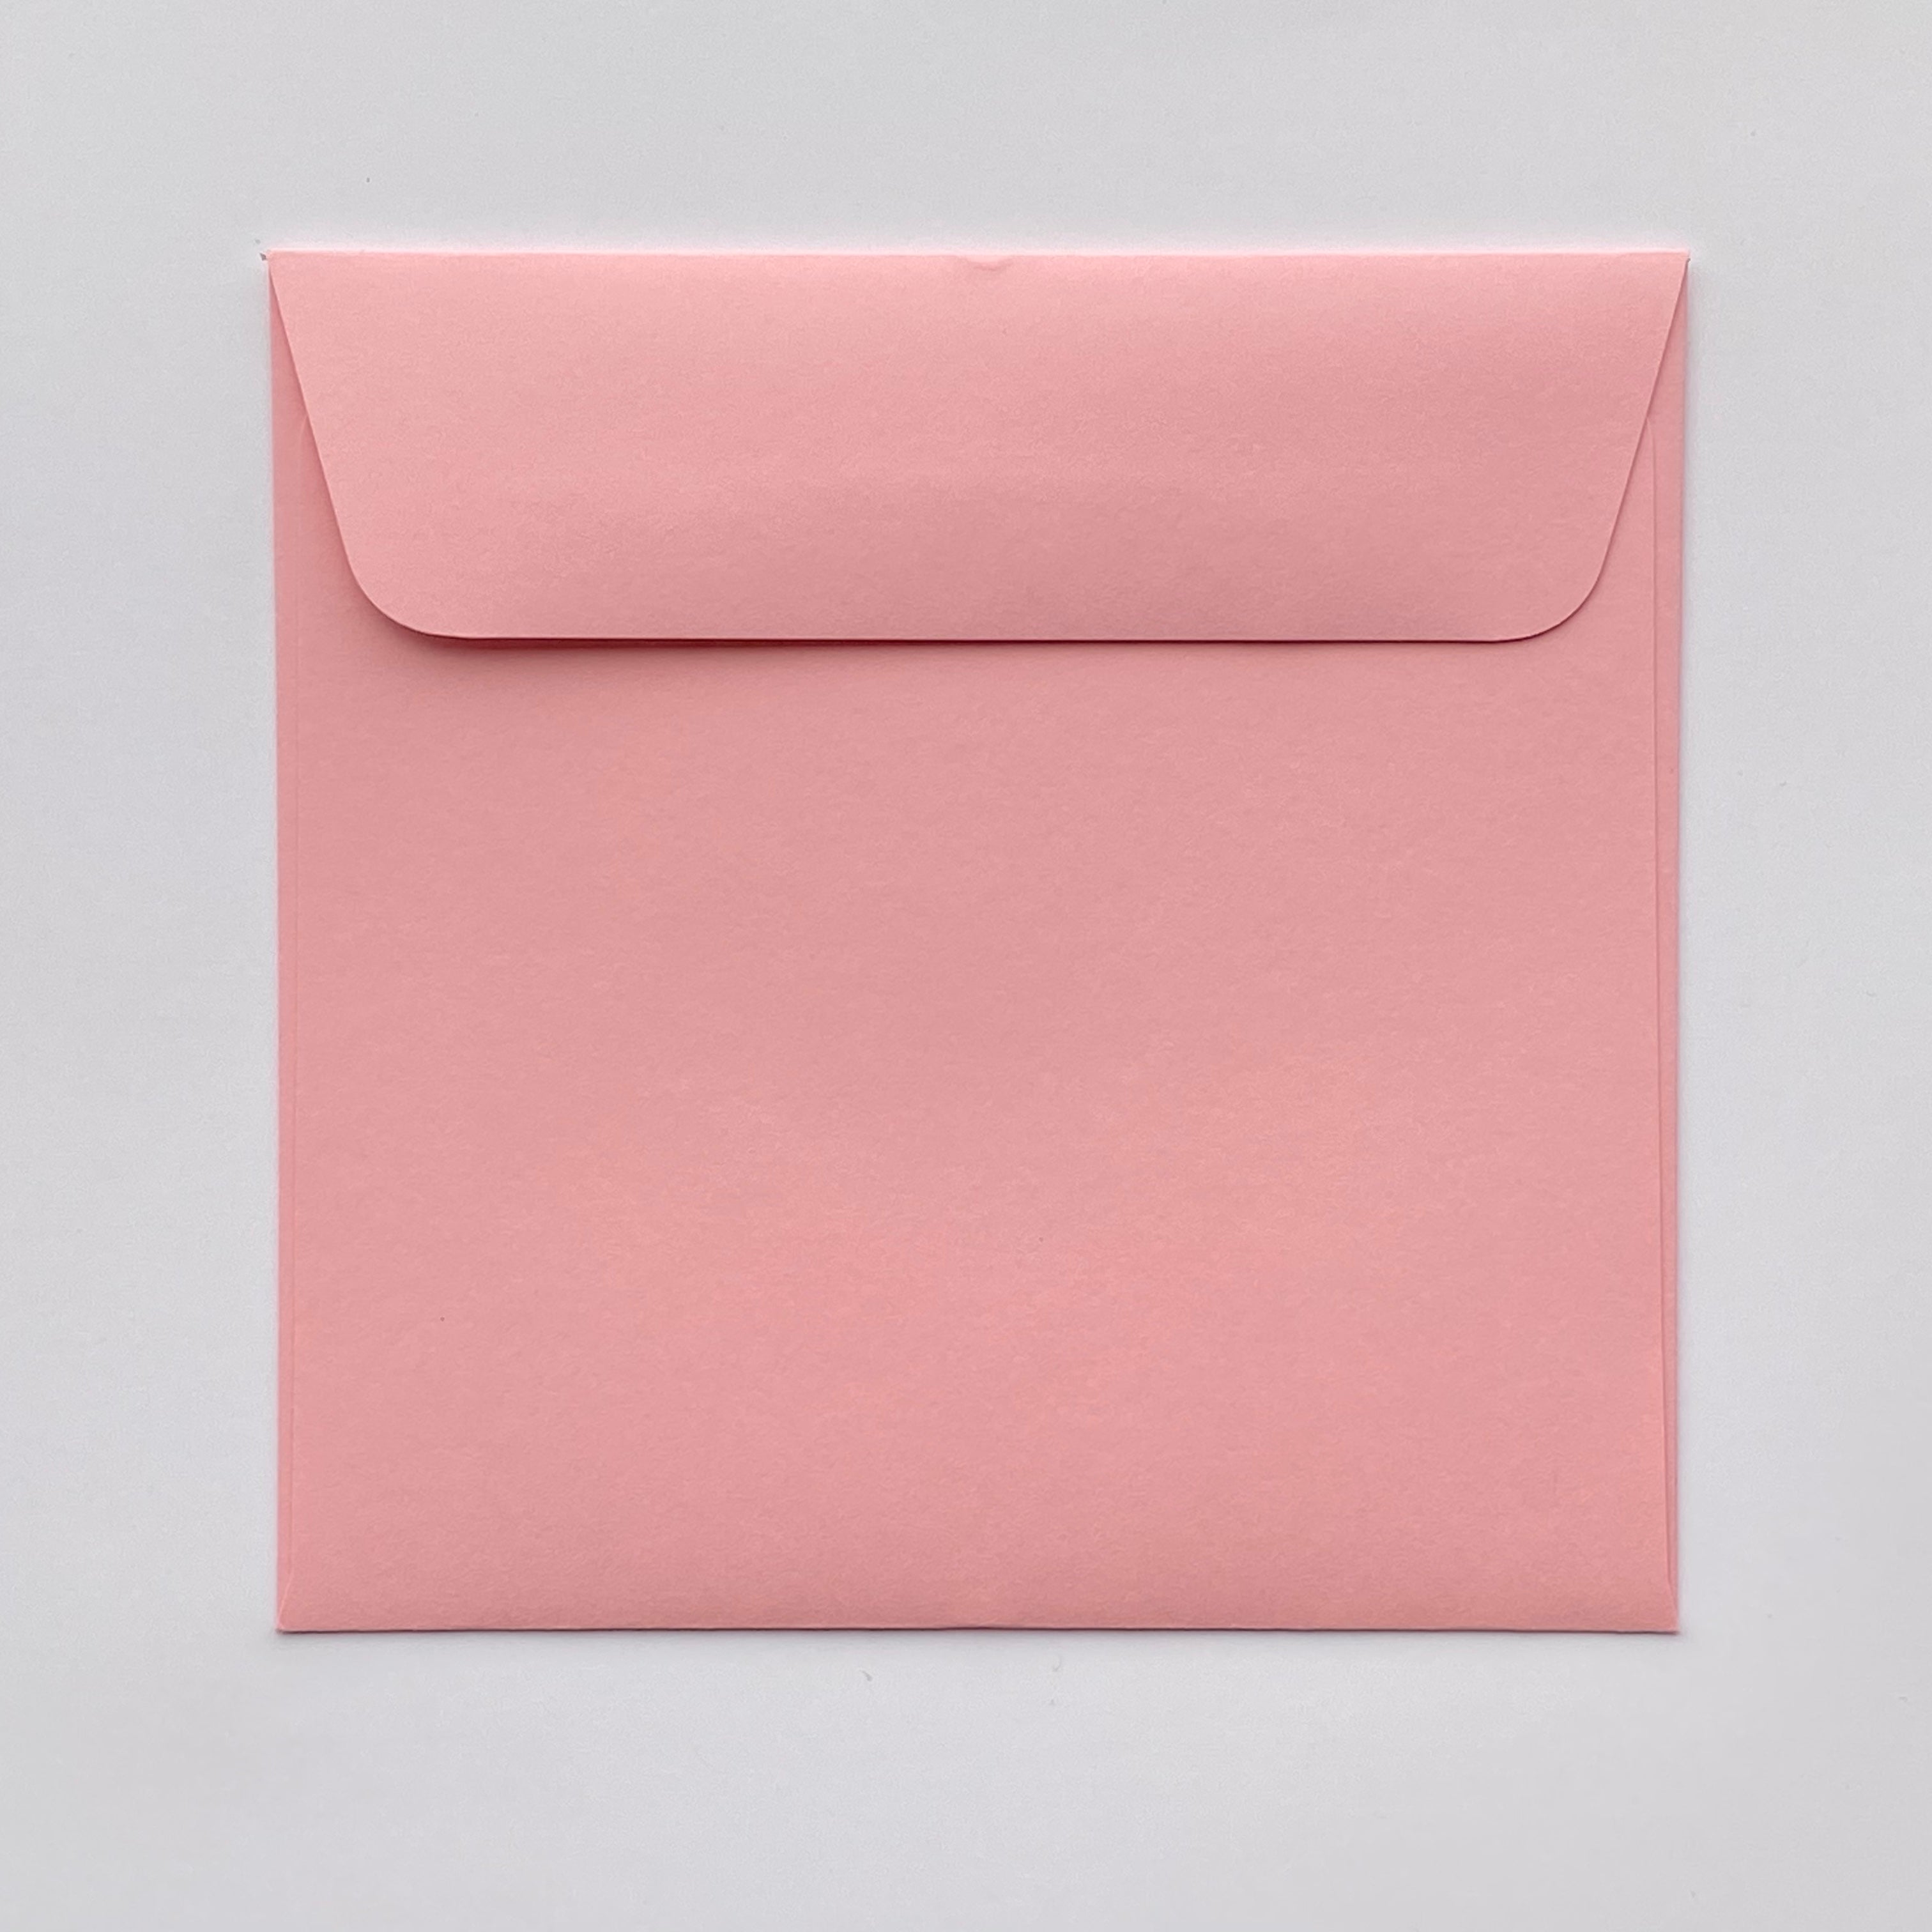 140mm square coloured envelopes